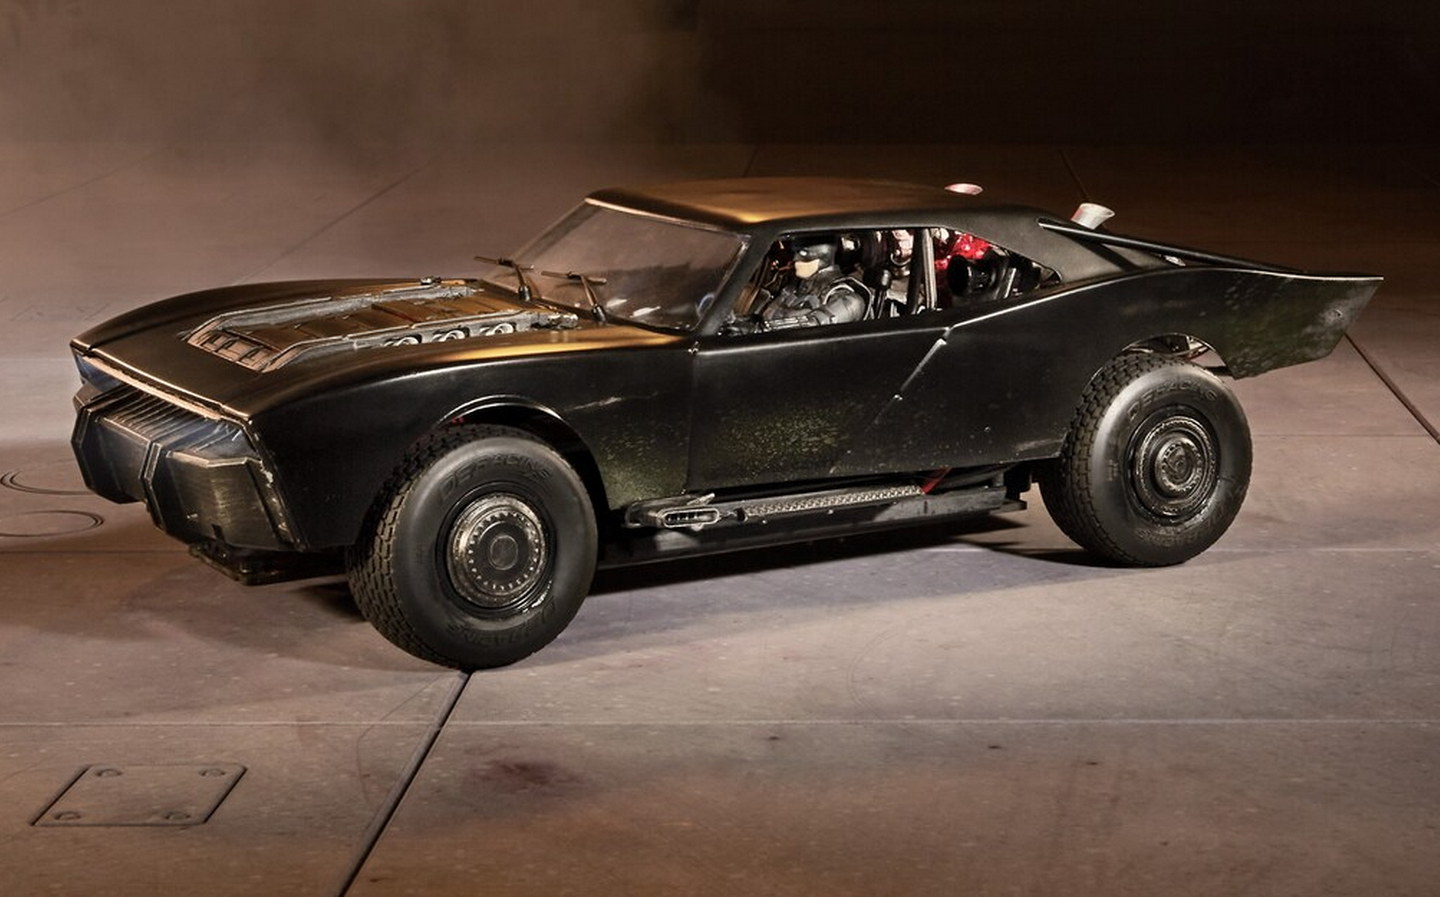 The Batman's Batmobile in RC format - by Hot Wheels